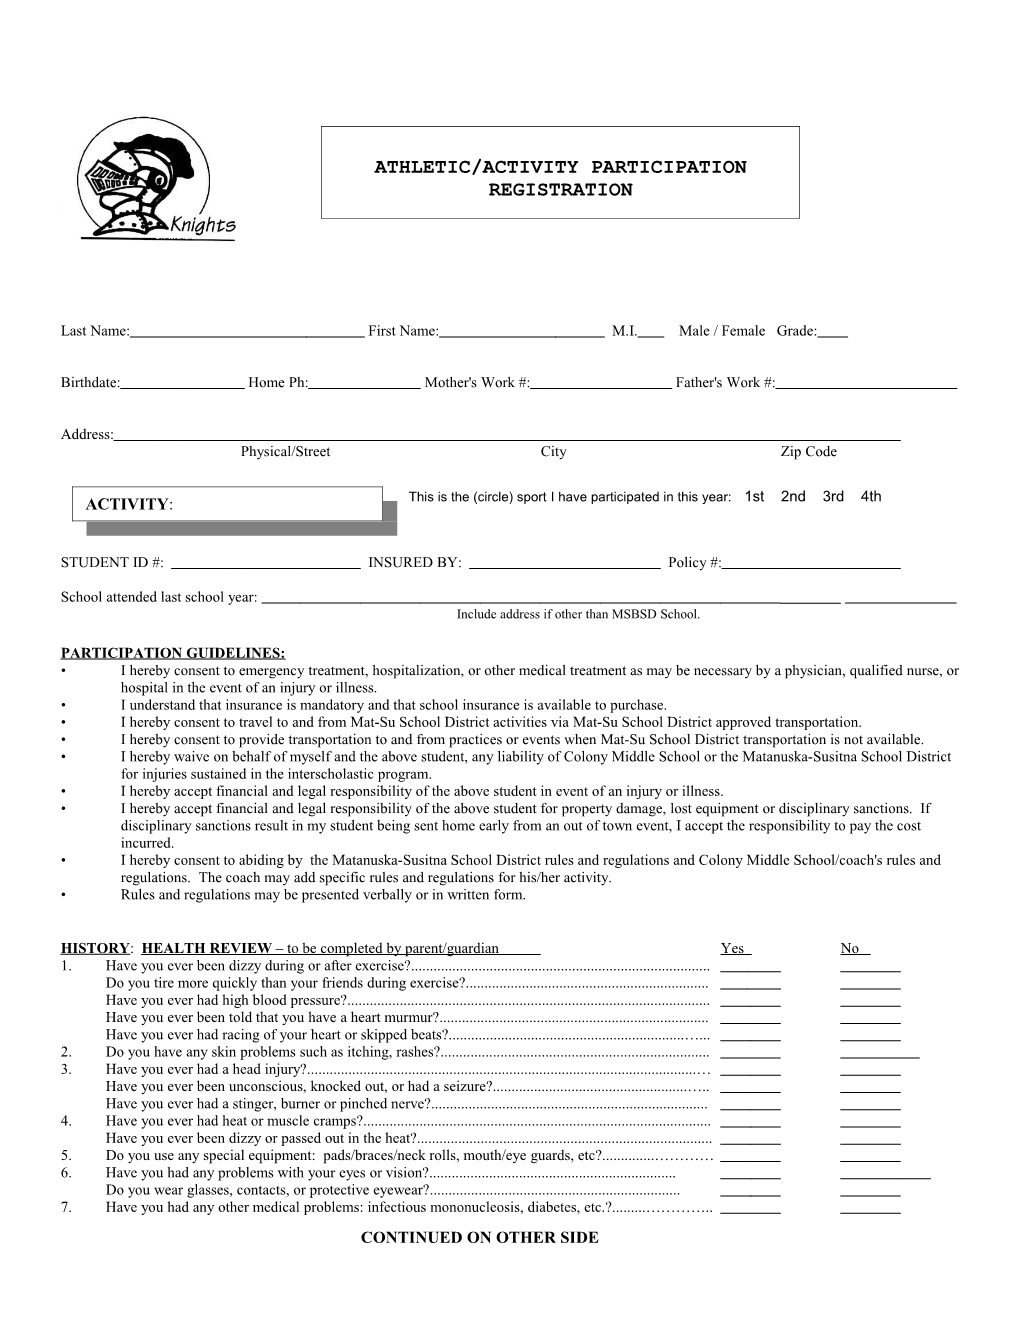 Mat-Su School District Athletic/Activity Participation Registration